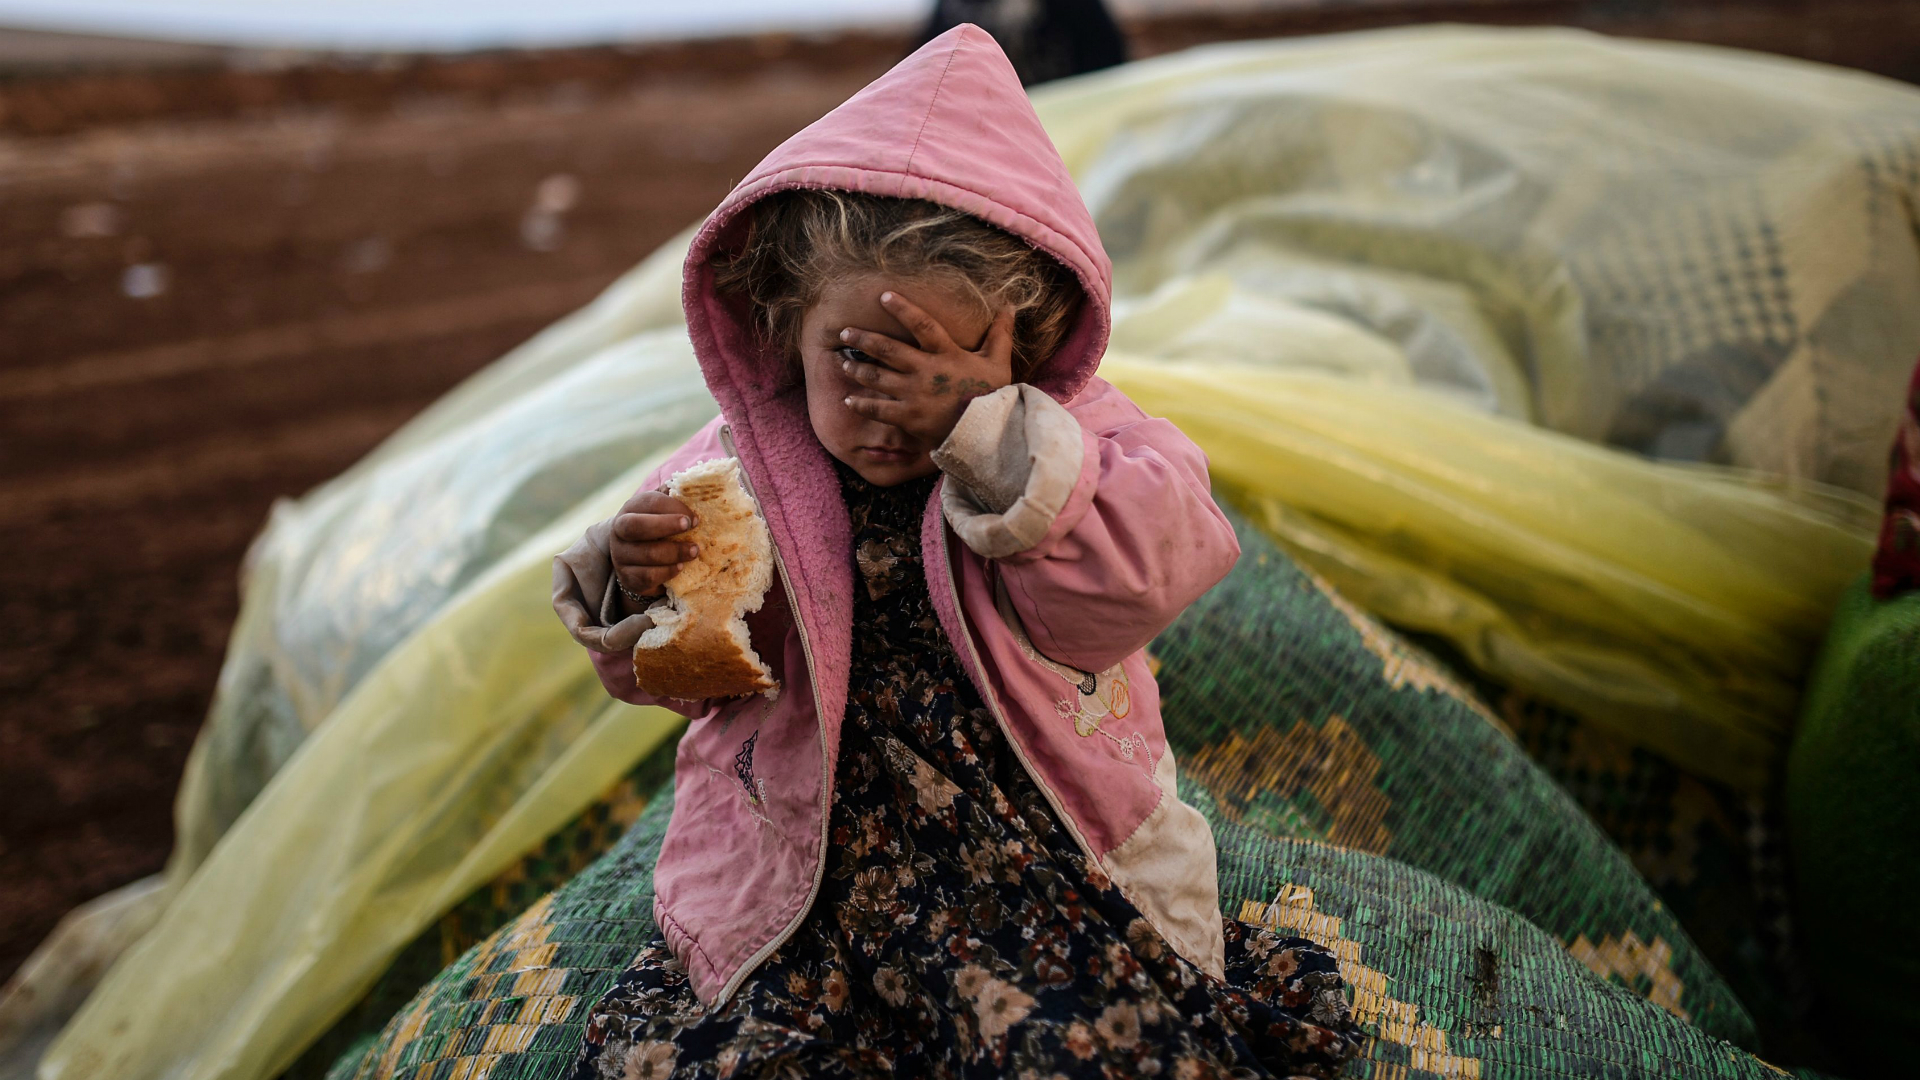 650 ألف طفل سوري يعانون سوء التغذية!